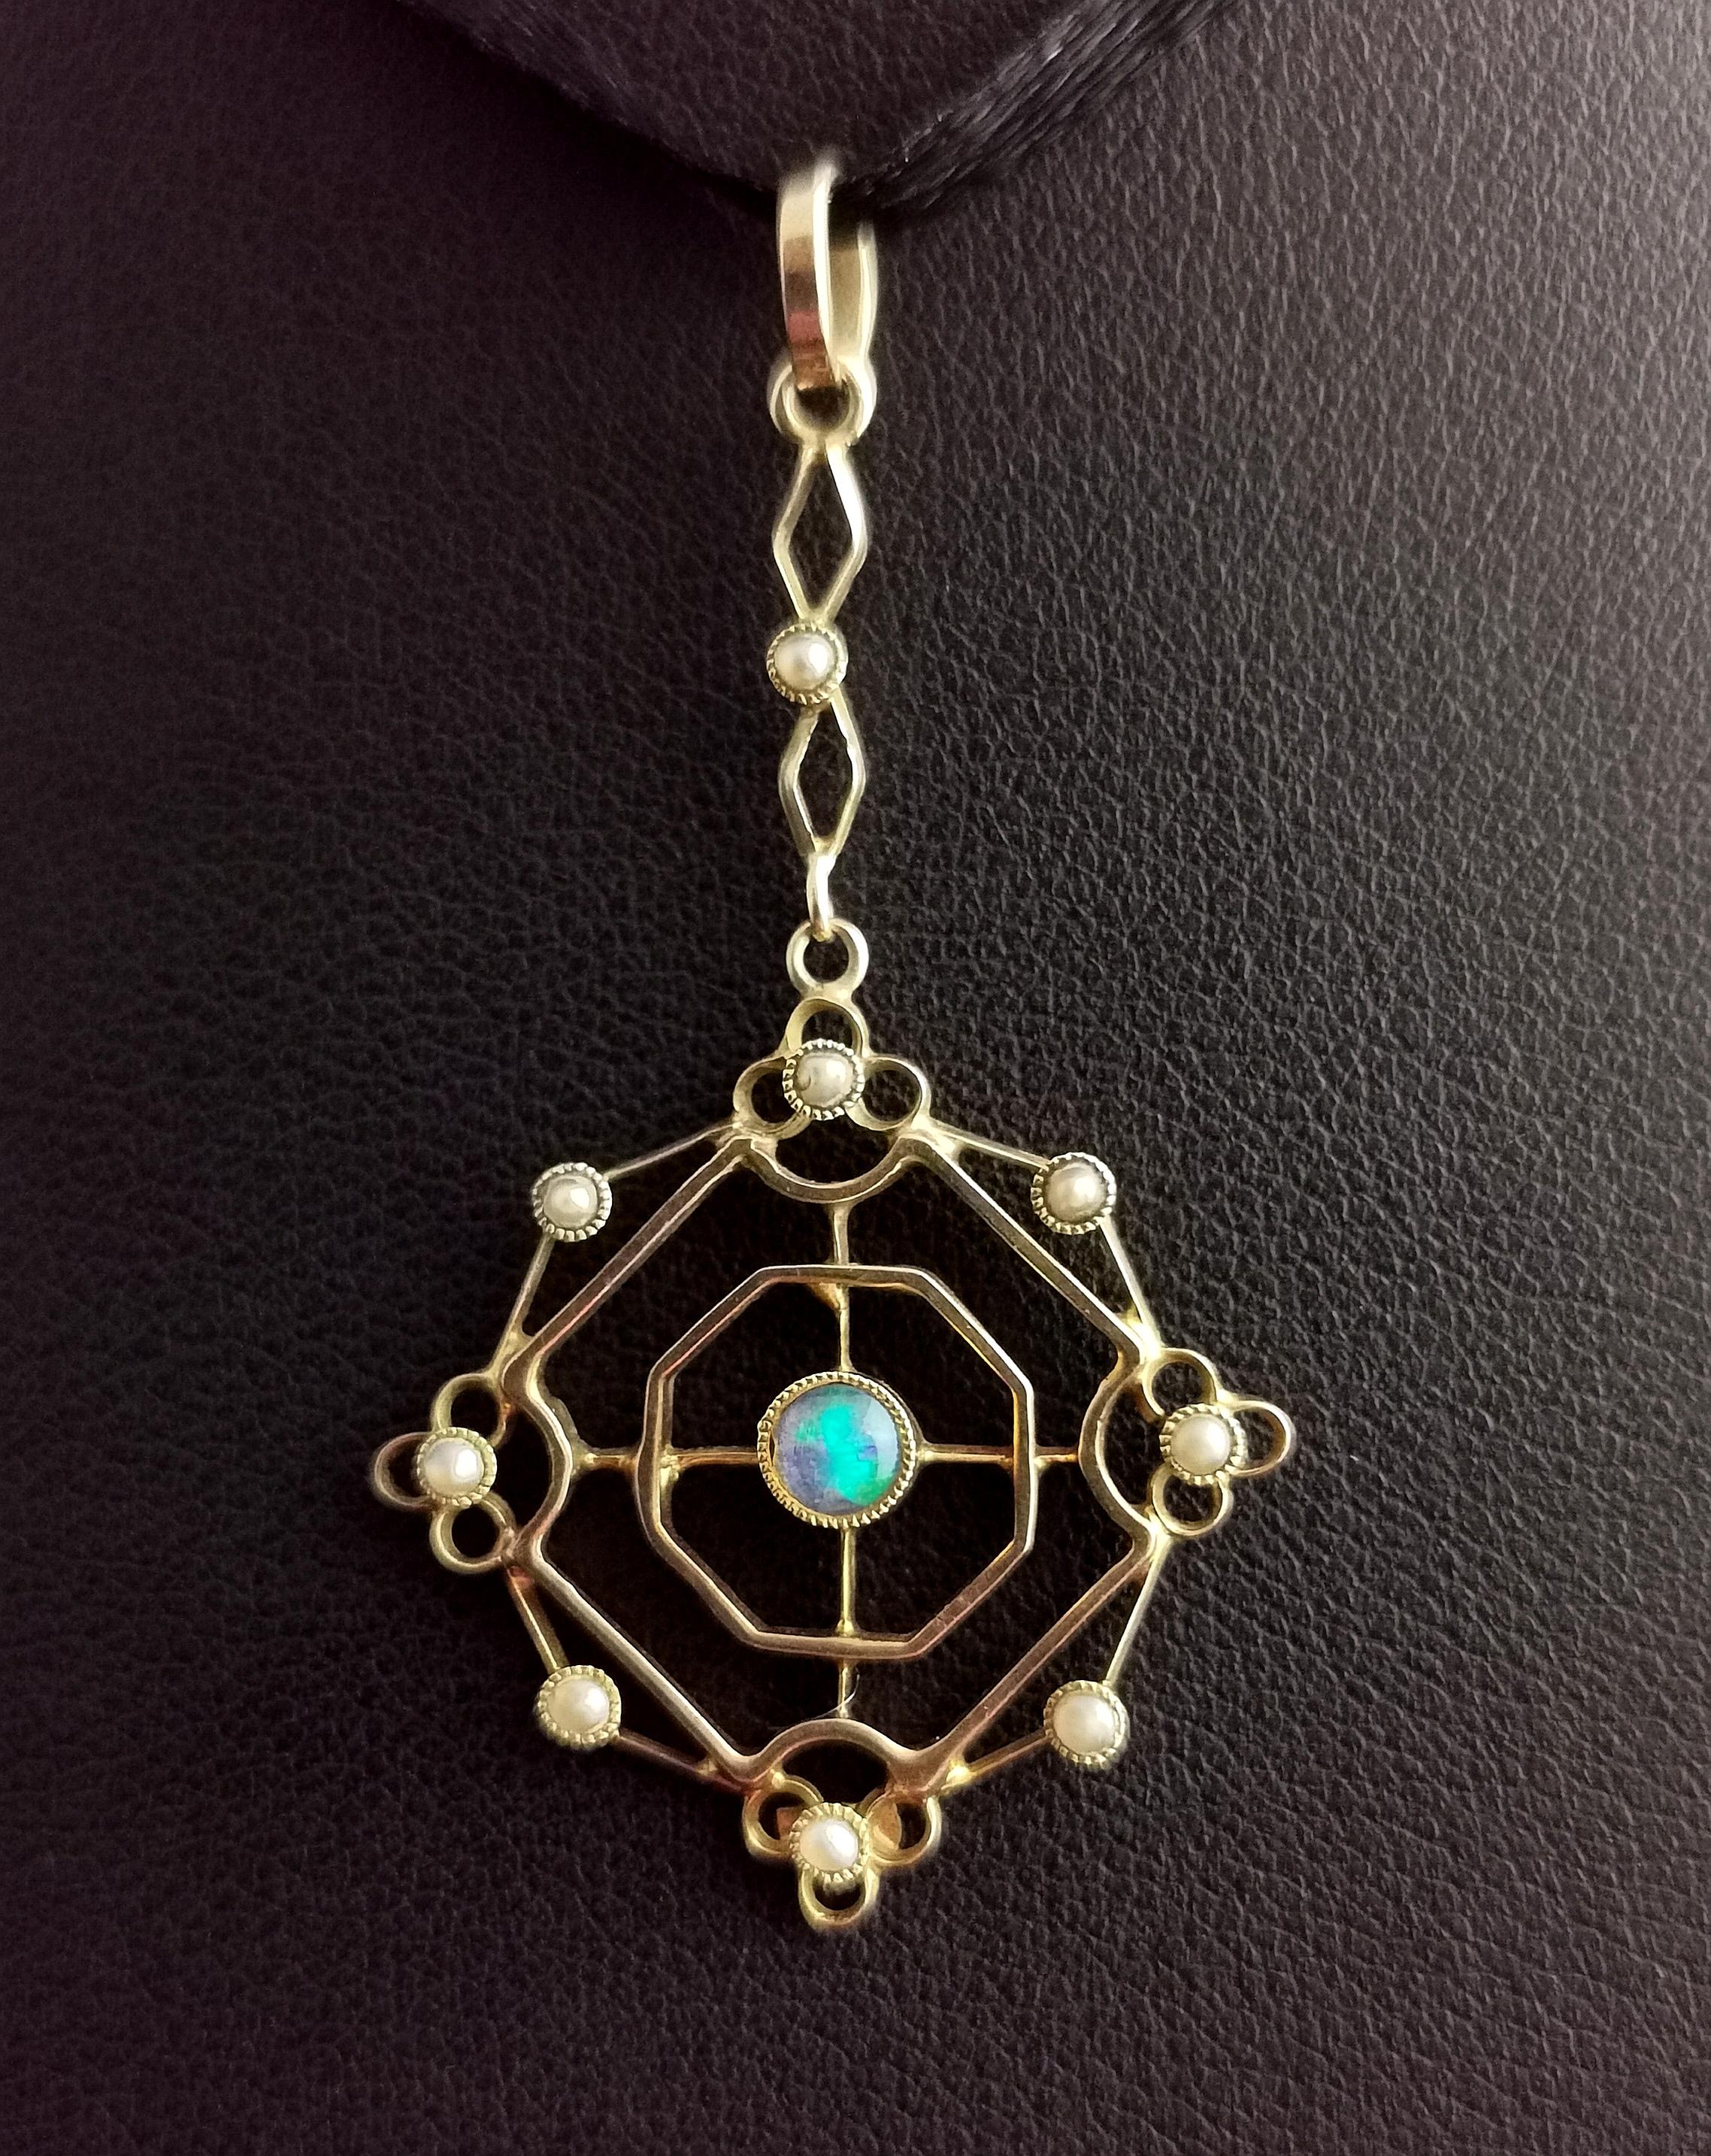 Antique Opal and Seed Pearl Pendant, 15k Gold, Art Nouveau 6